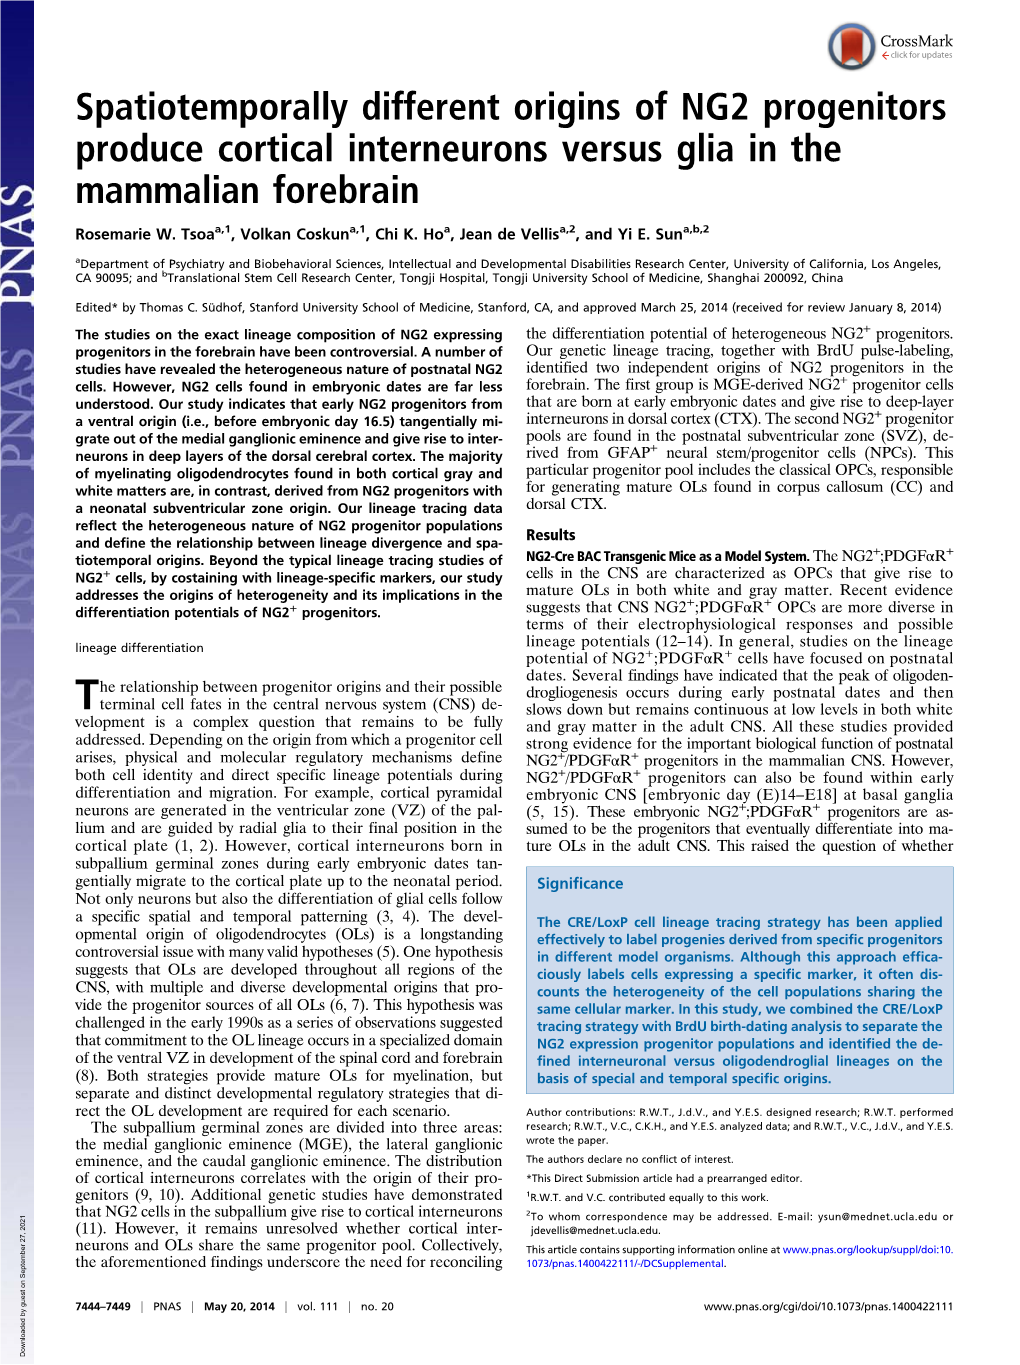 Spatiotemporally Different Origins of NG2 Progenitors Produce Cortical Interneurons Versus Glia in the Mammalian Forebrain